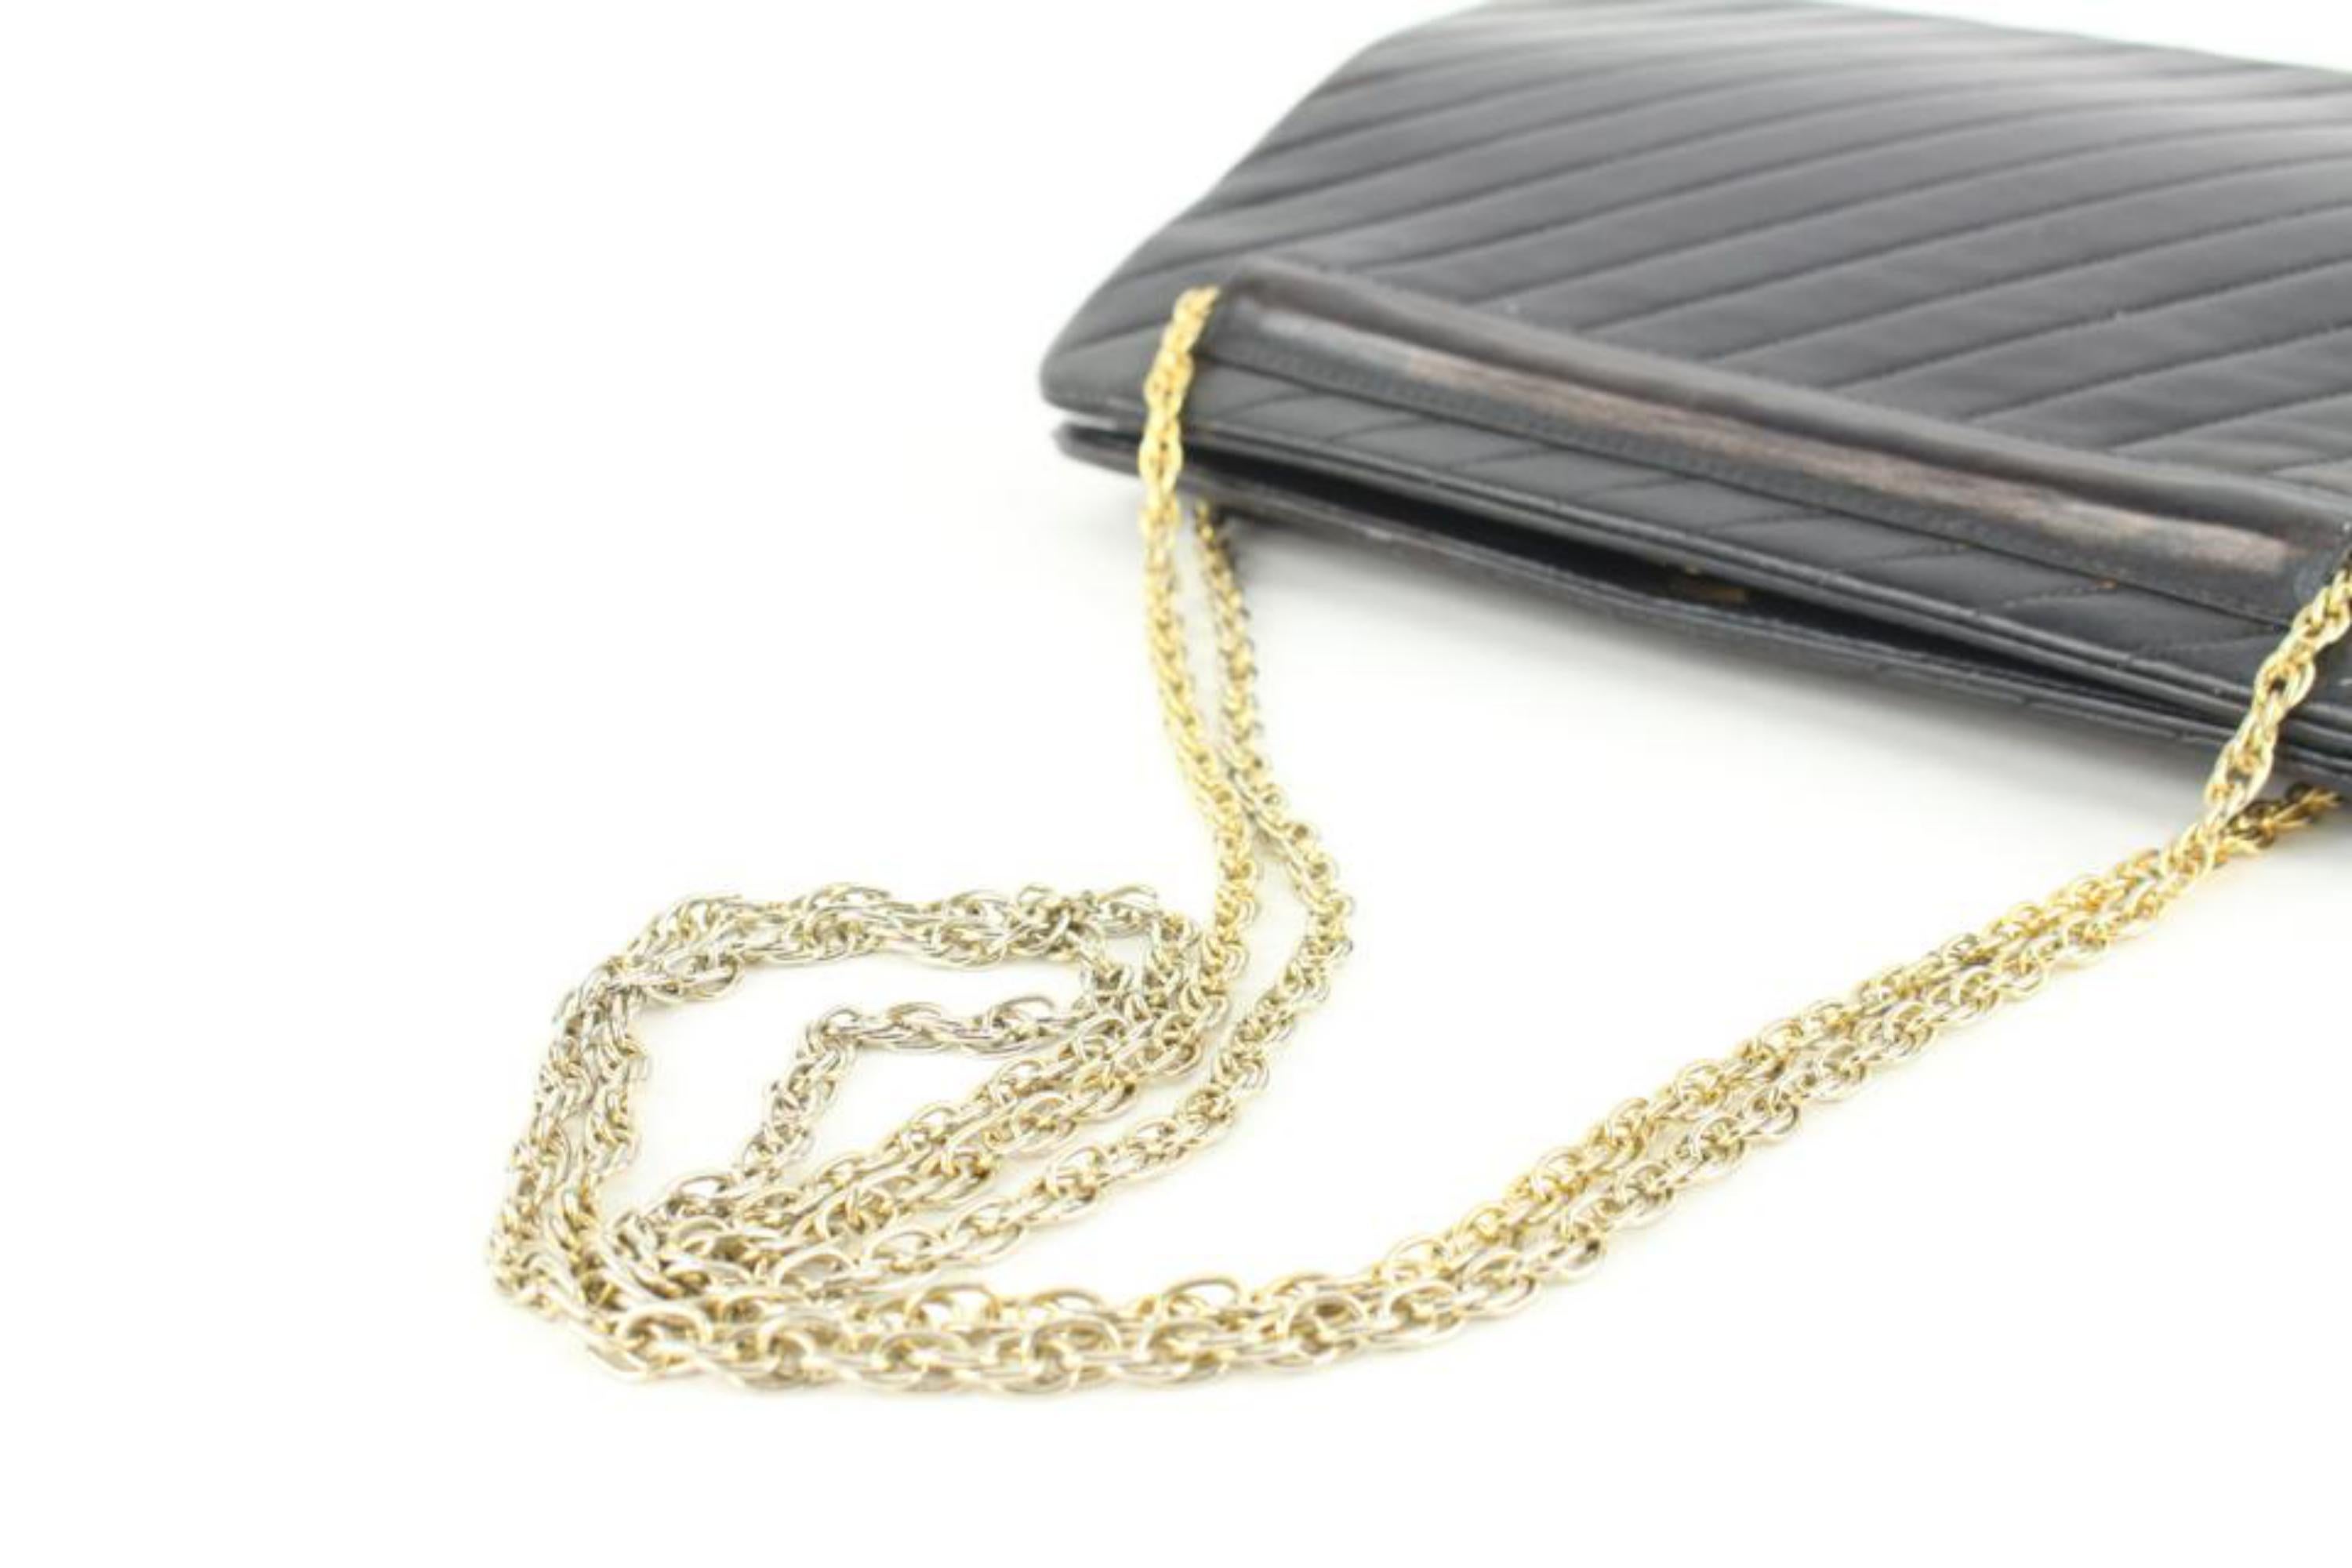 Chanel Black Chevron Leather Chain Bag 113ca57 For Sale 2